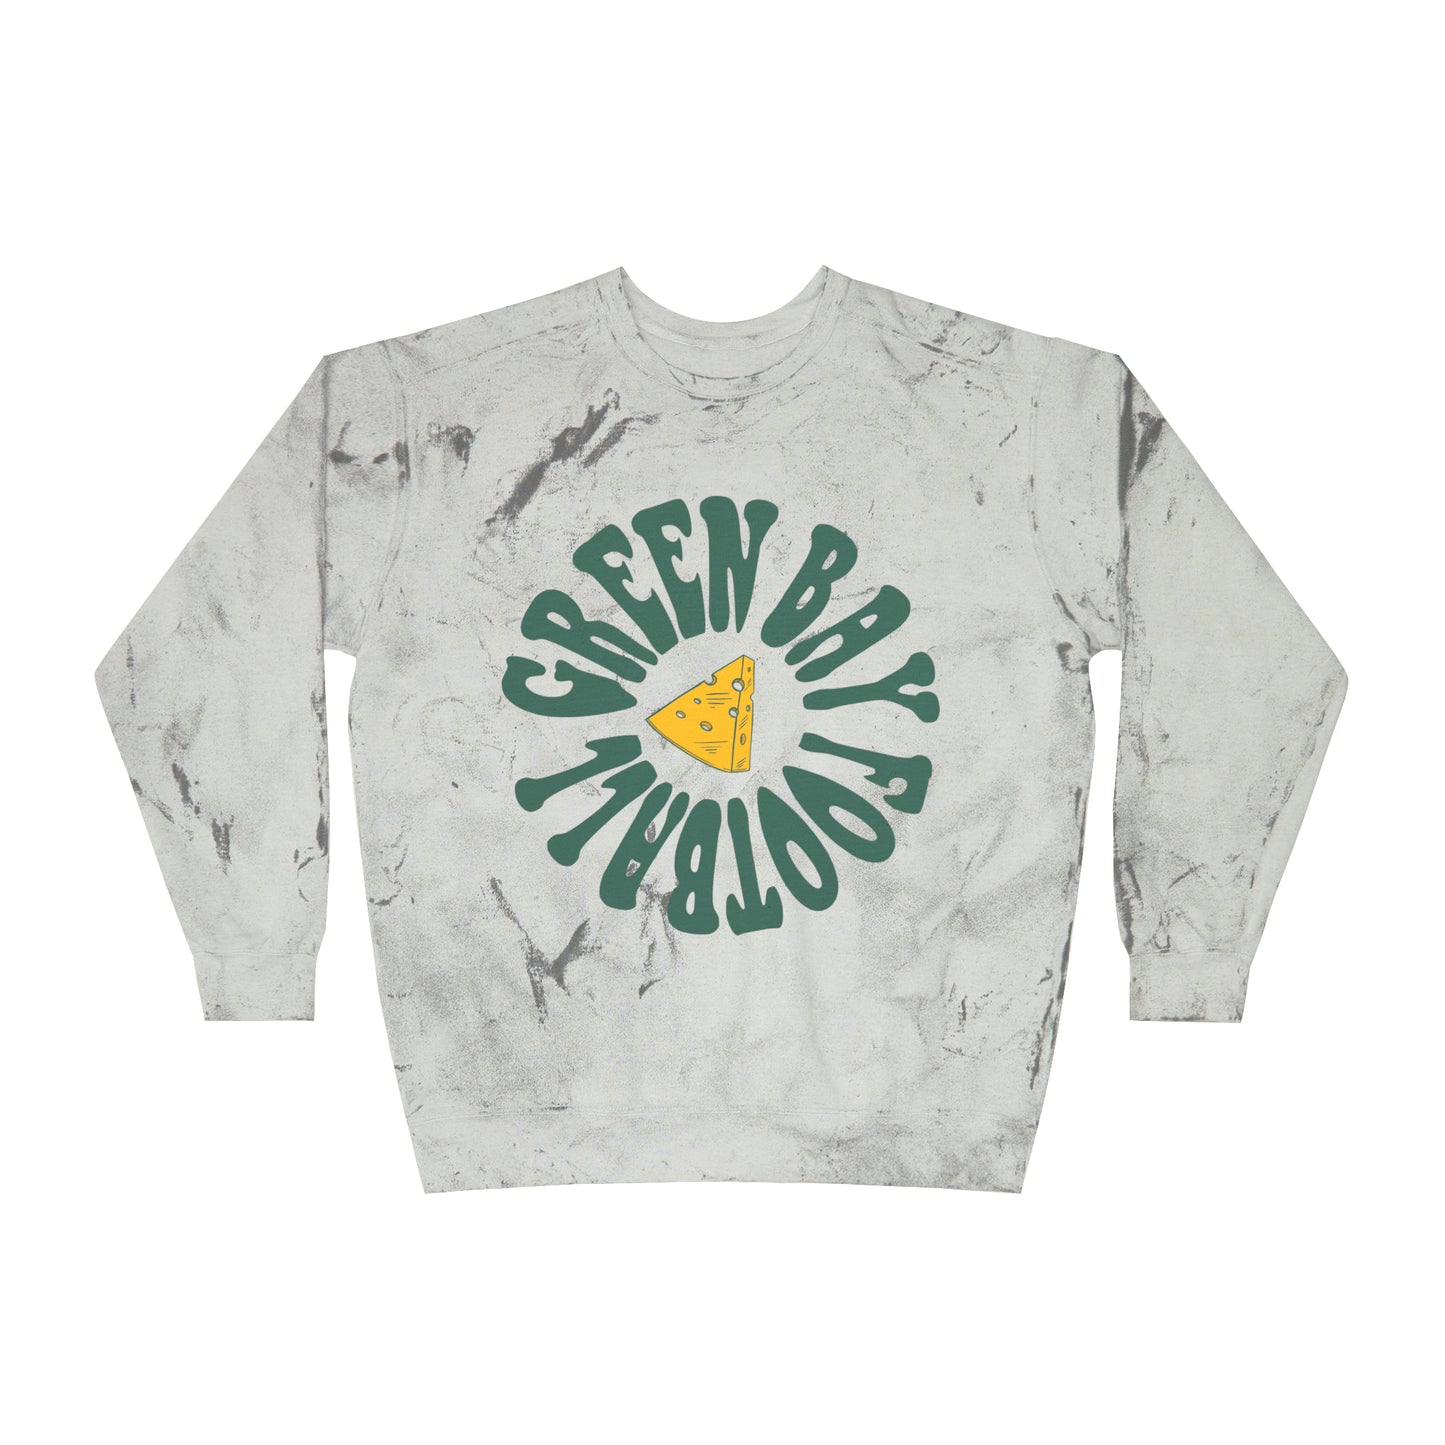 Comfort Colors Tie Dye Hippy Green Bay Packers Football Sweatshirt - Vintage Retro Crewneck -  Design 2